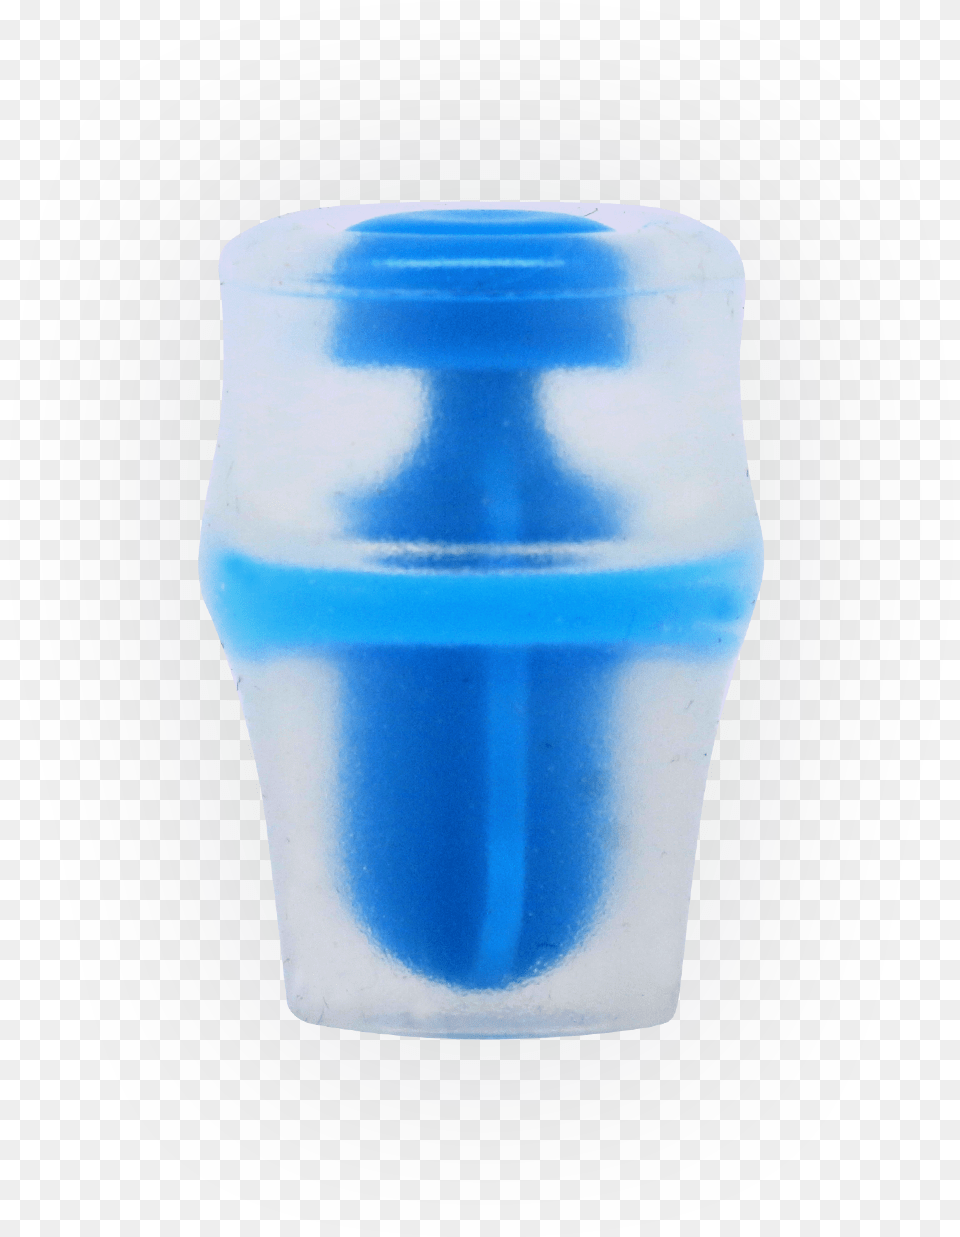 Valve For Soft Flask And Water Bladder Plastic, Jar, Pottery, Cup, Vase Free Png Download